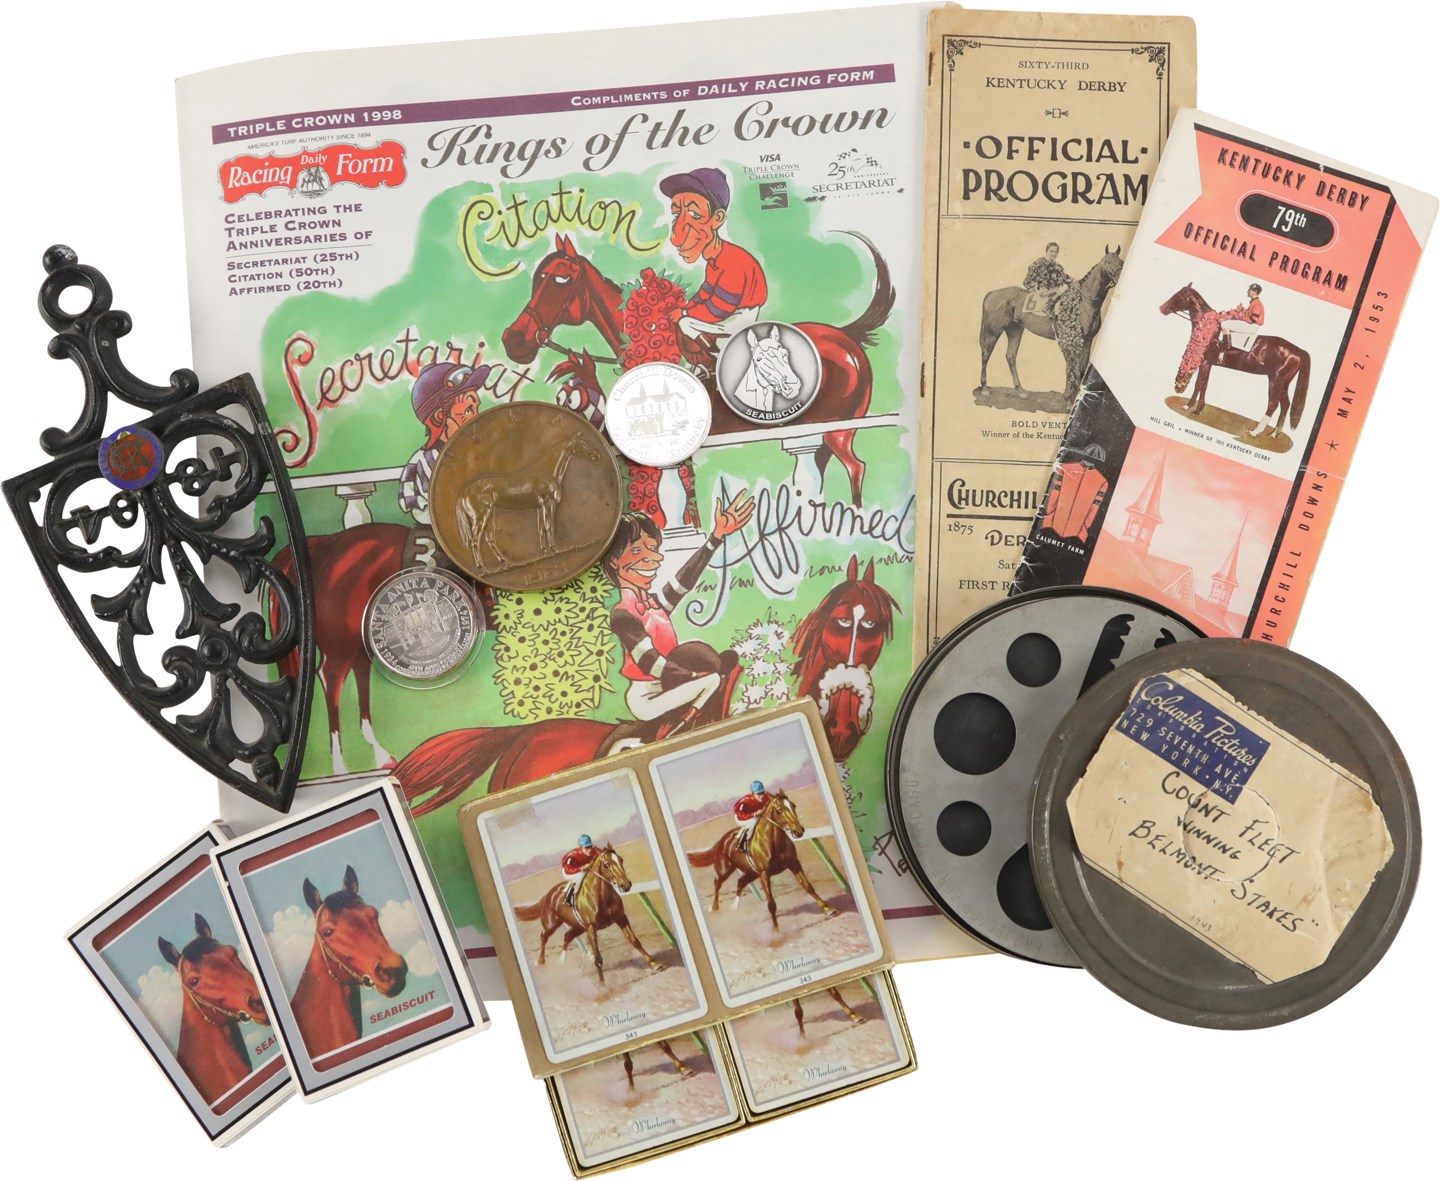 Miscellaneous Horse Racing Memorabilia (13)